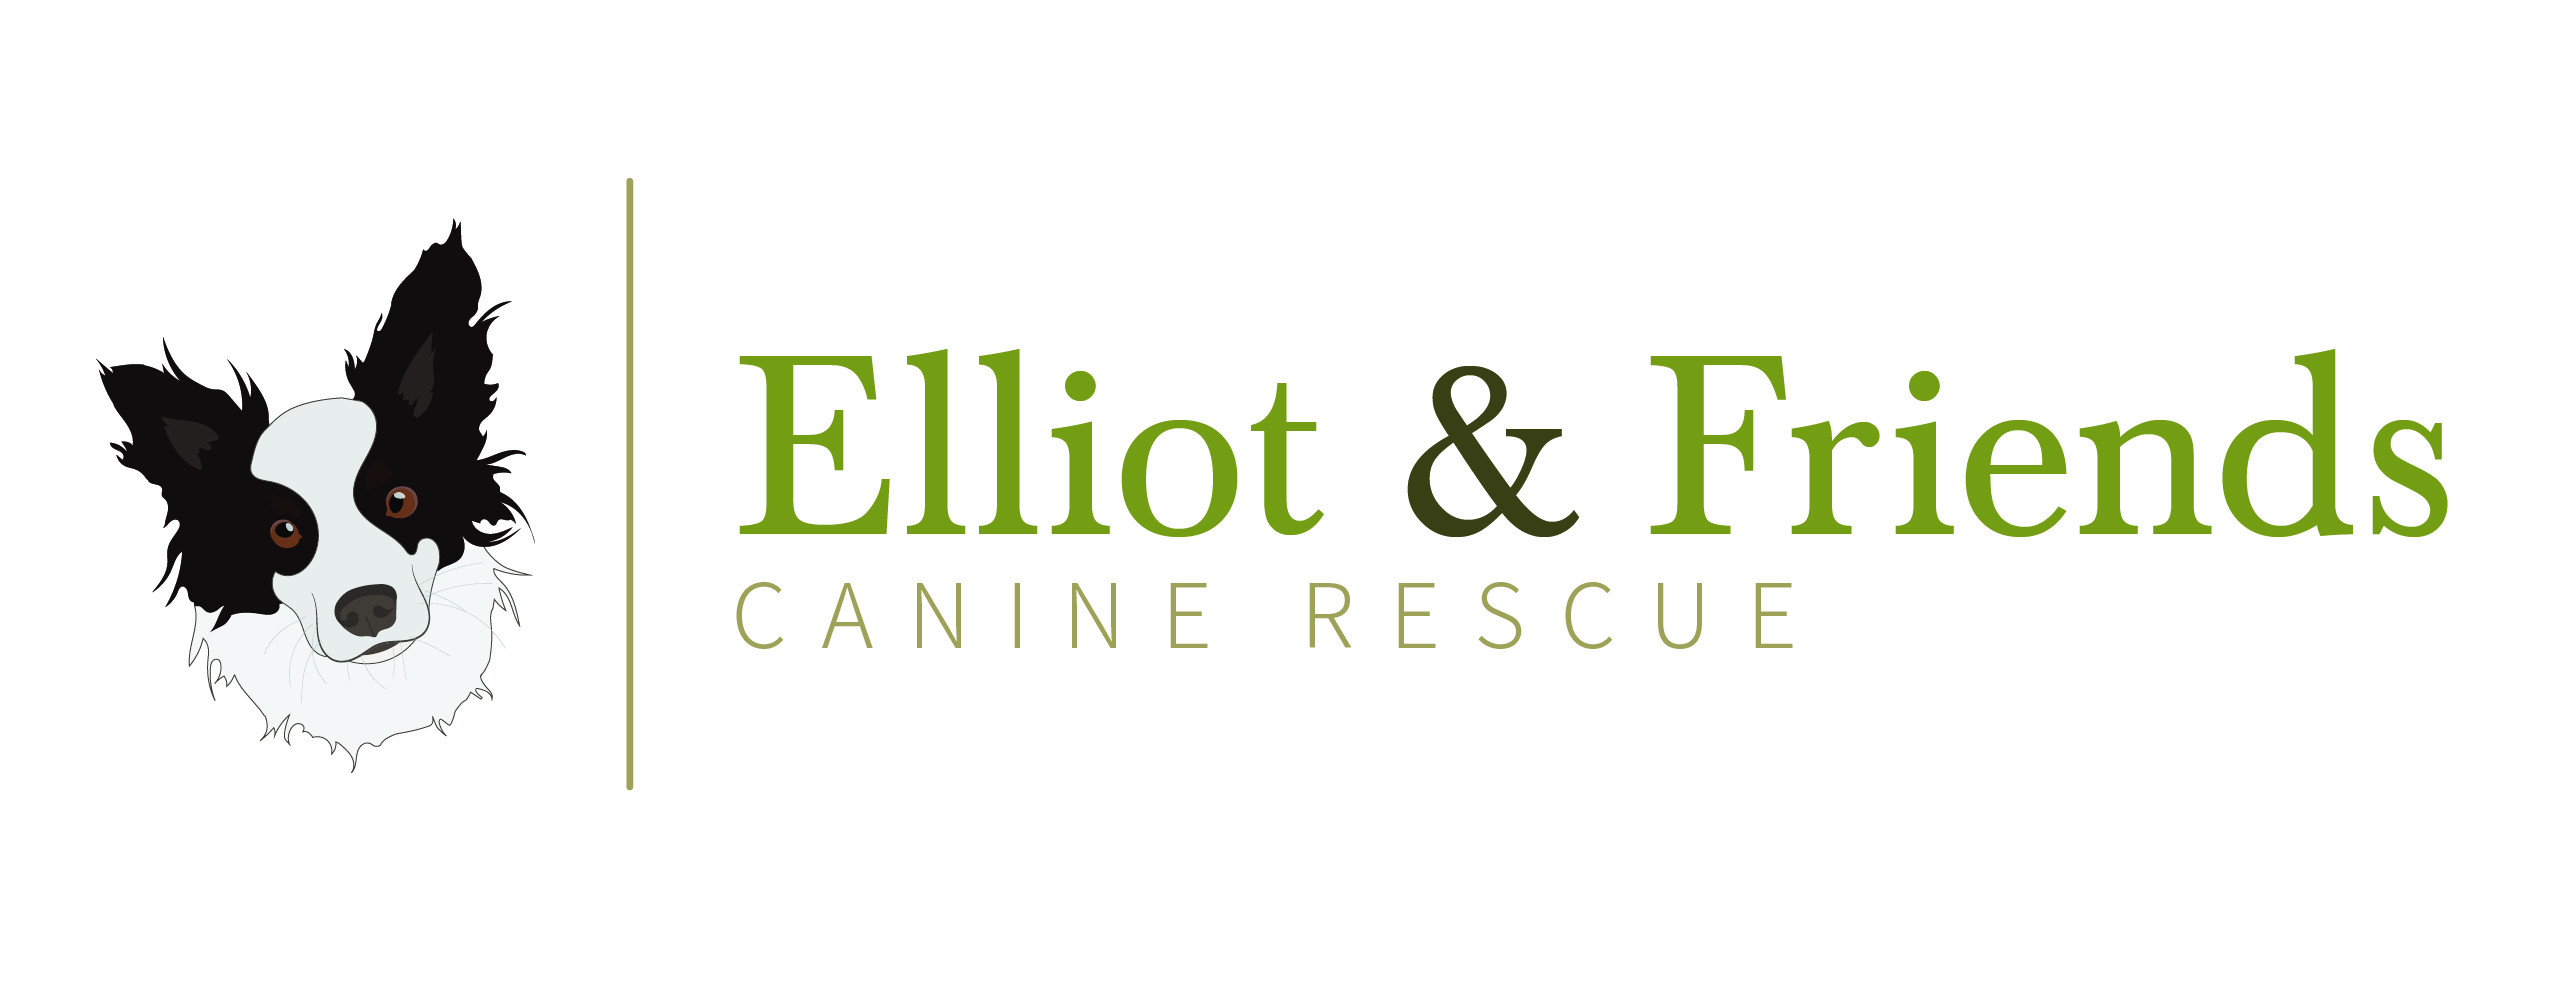 Elliot & Friends Canine Rescue logo